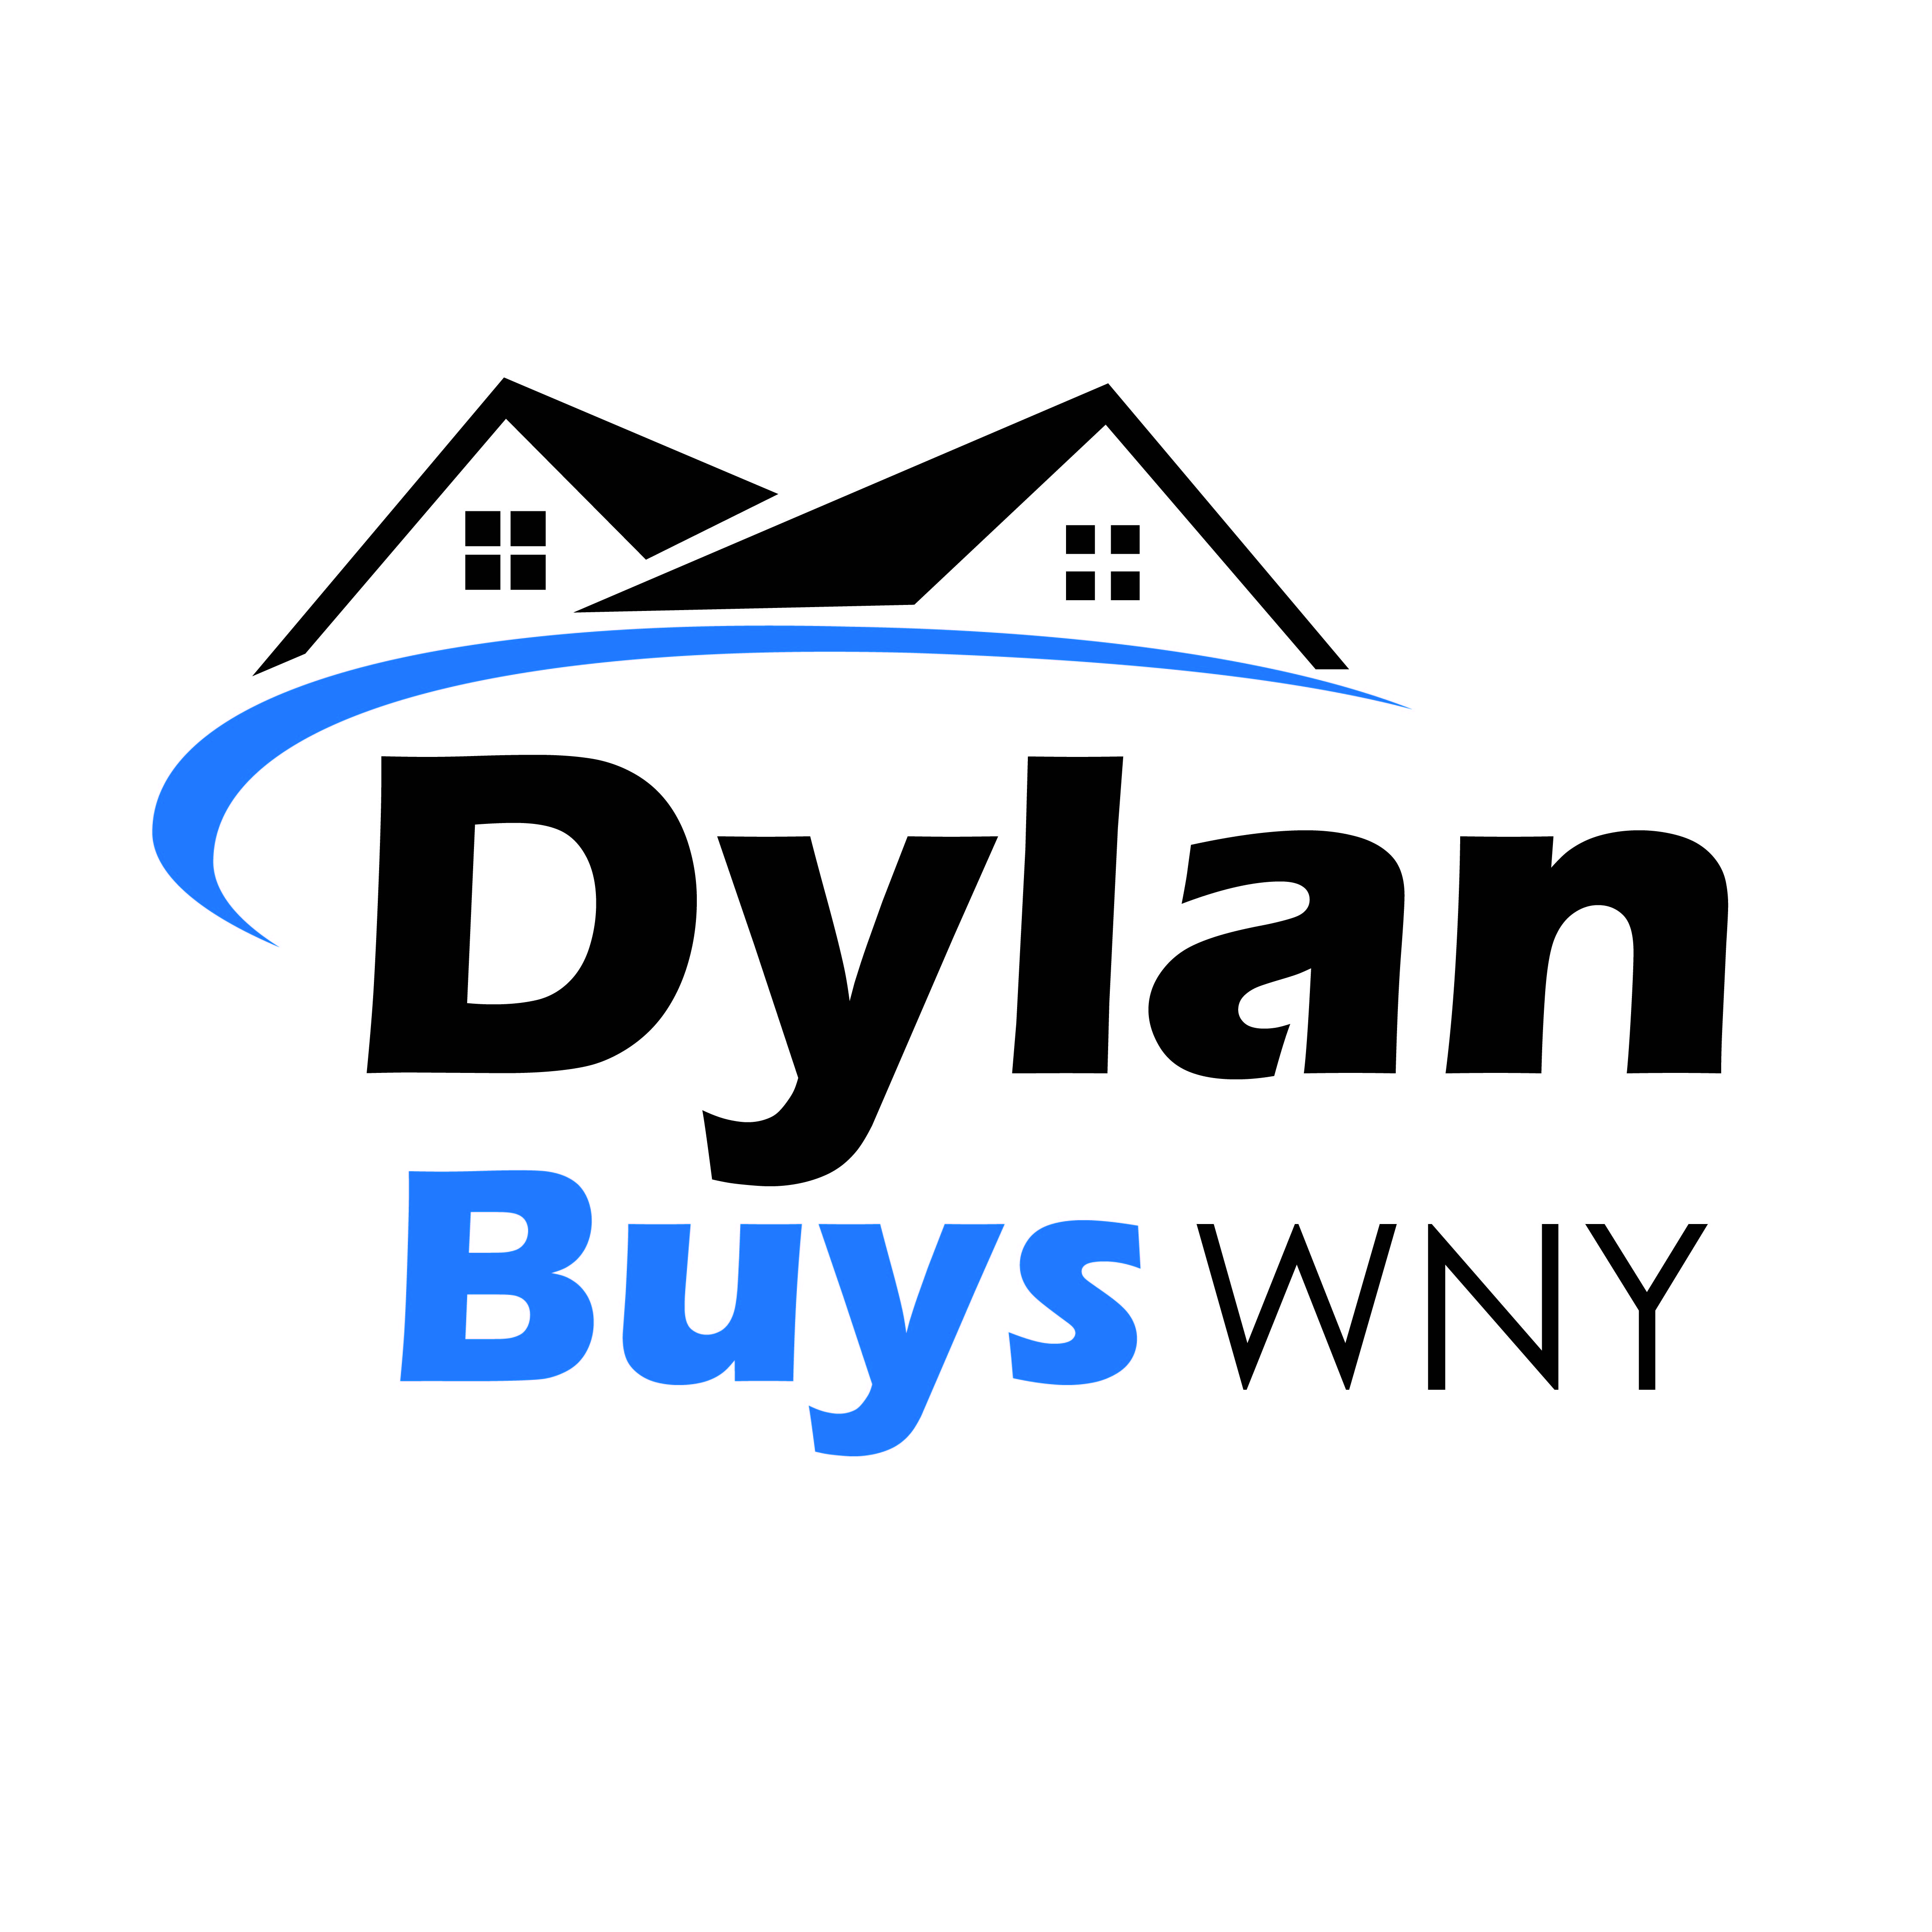 Dylan-Buys-WNY-logo.jpg